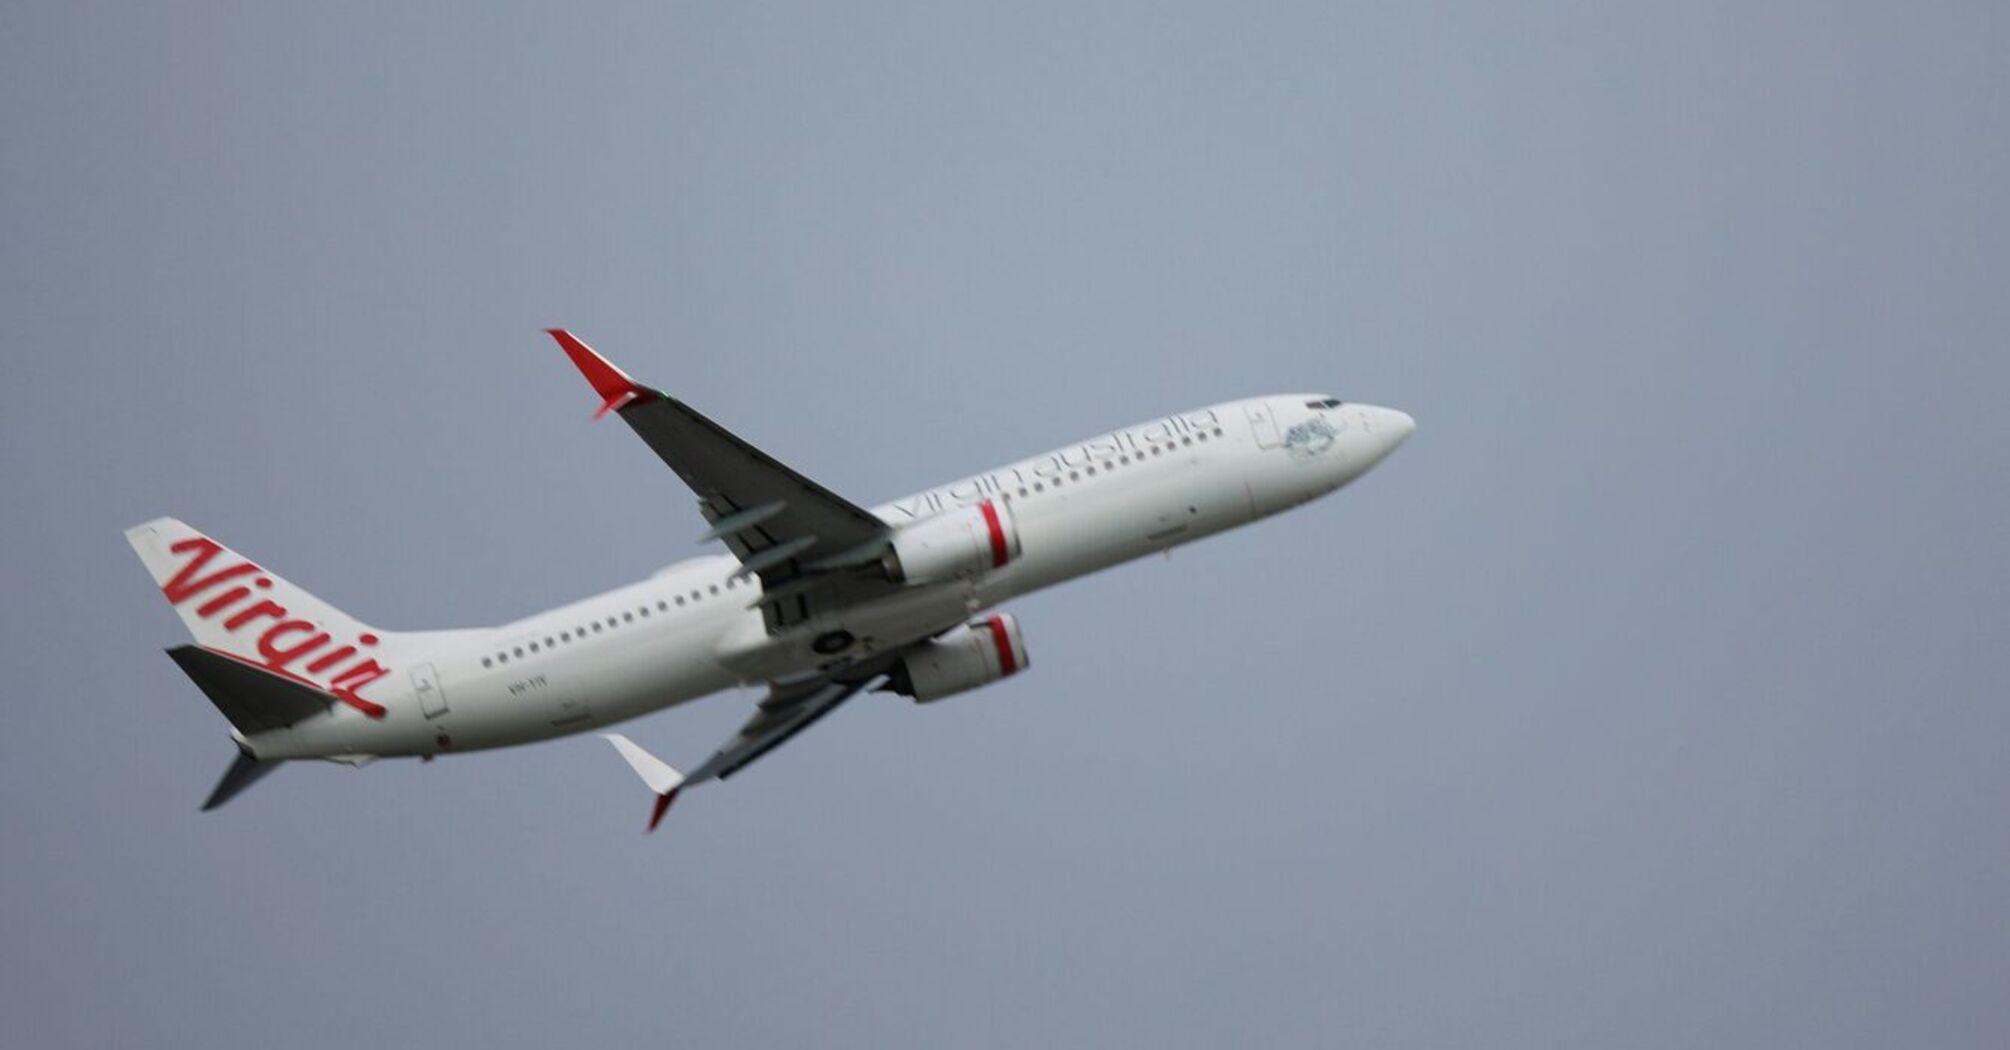 Virgin Australia 737 taking off from Gold Coast Airport